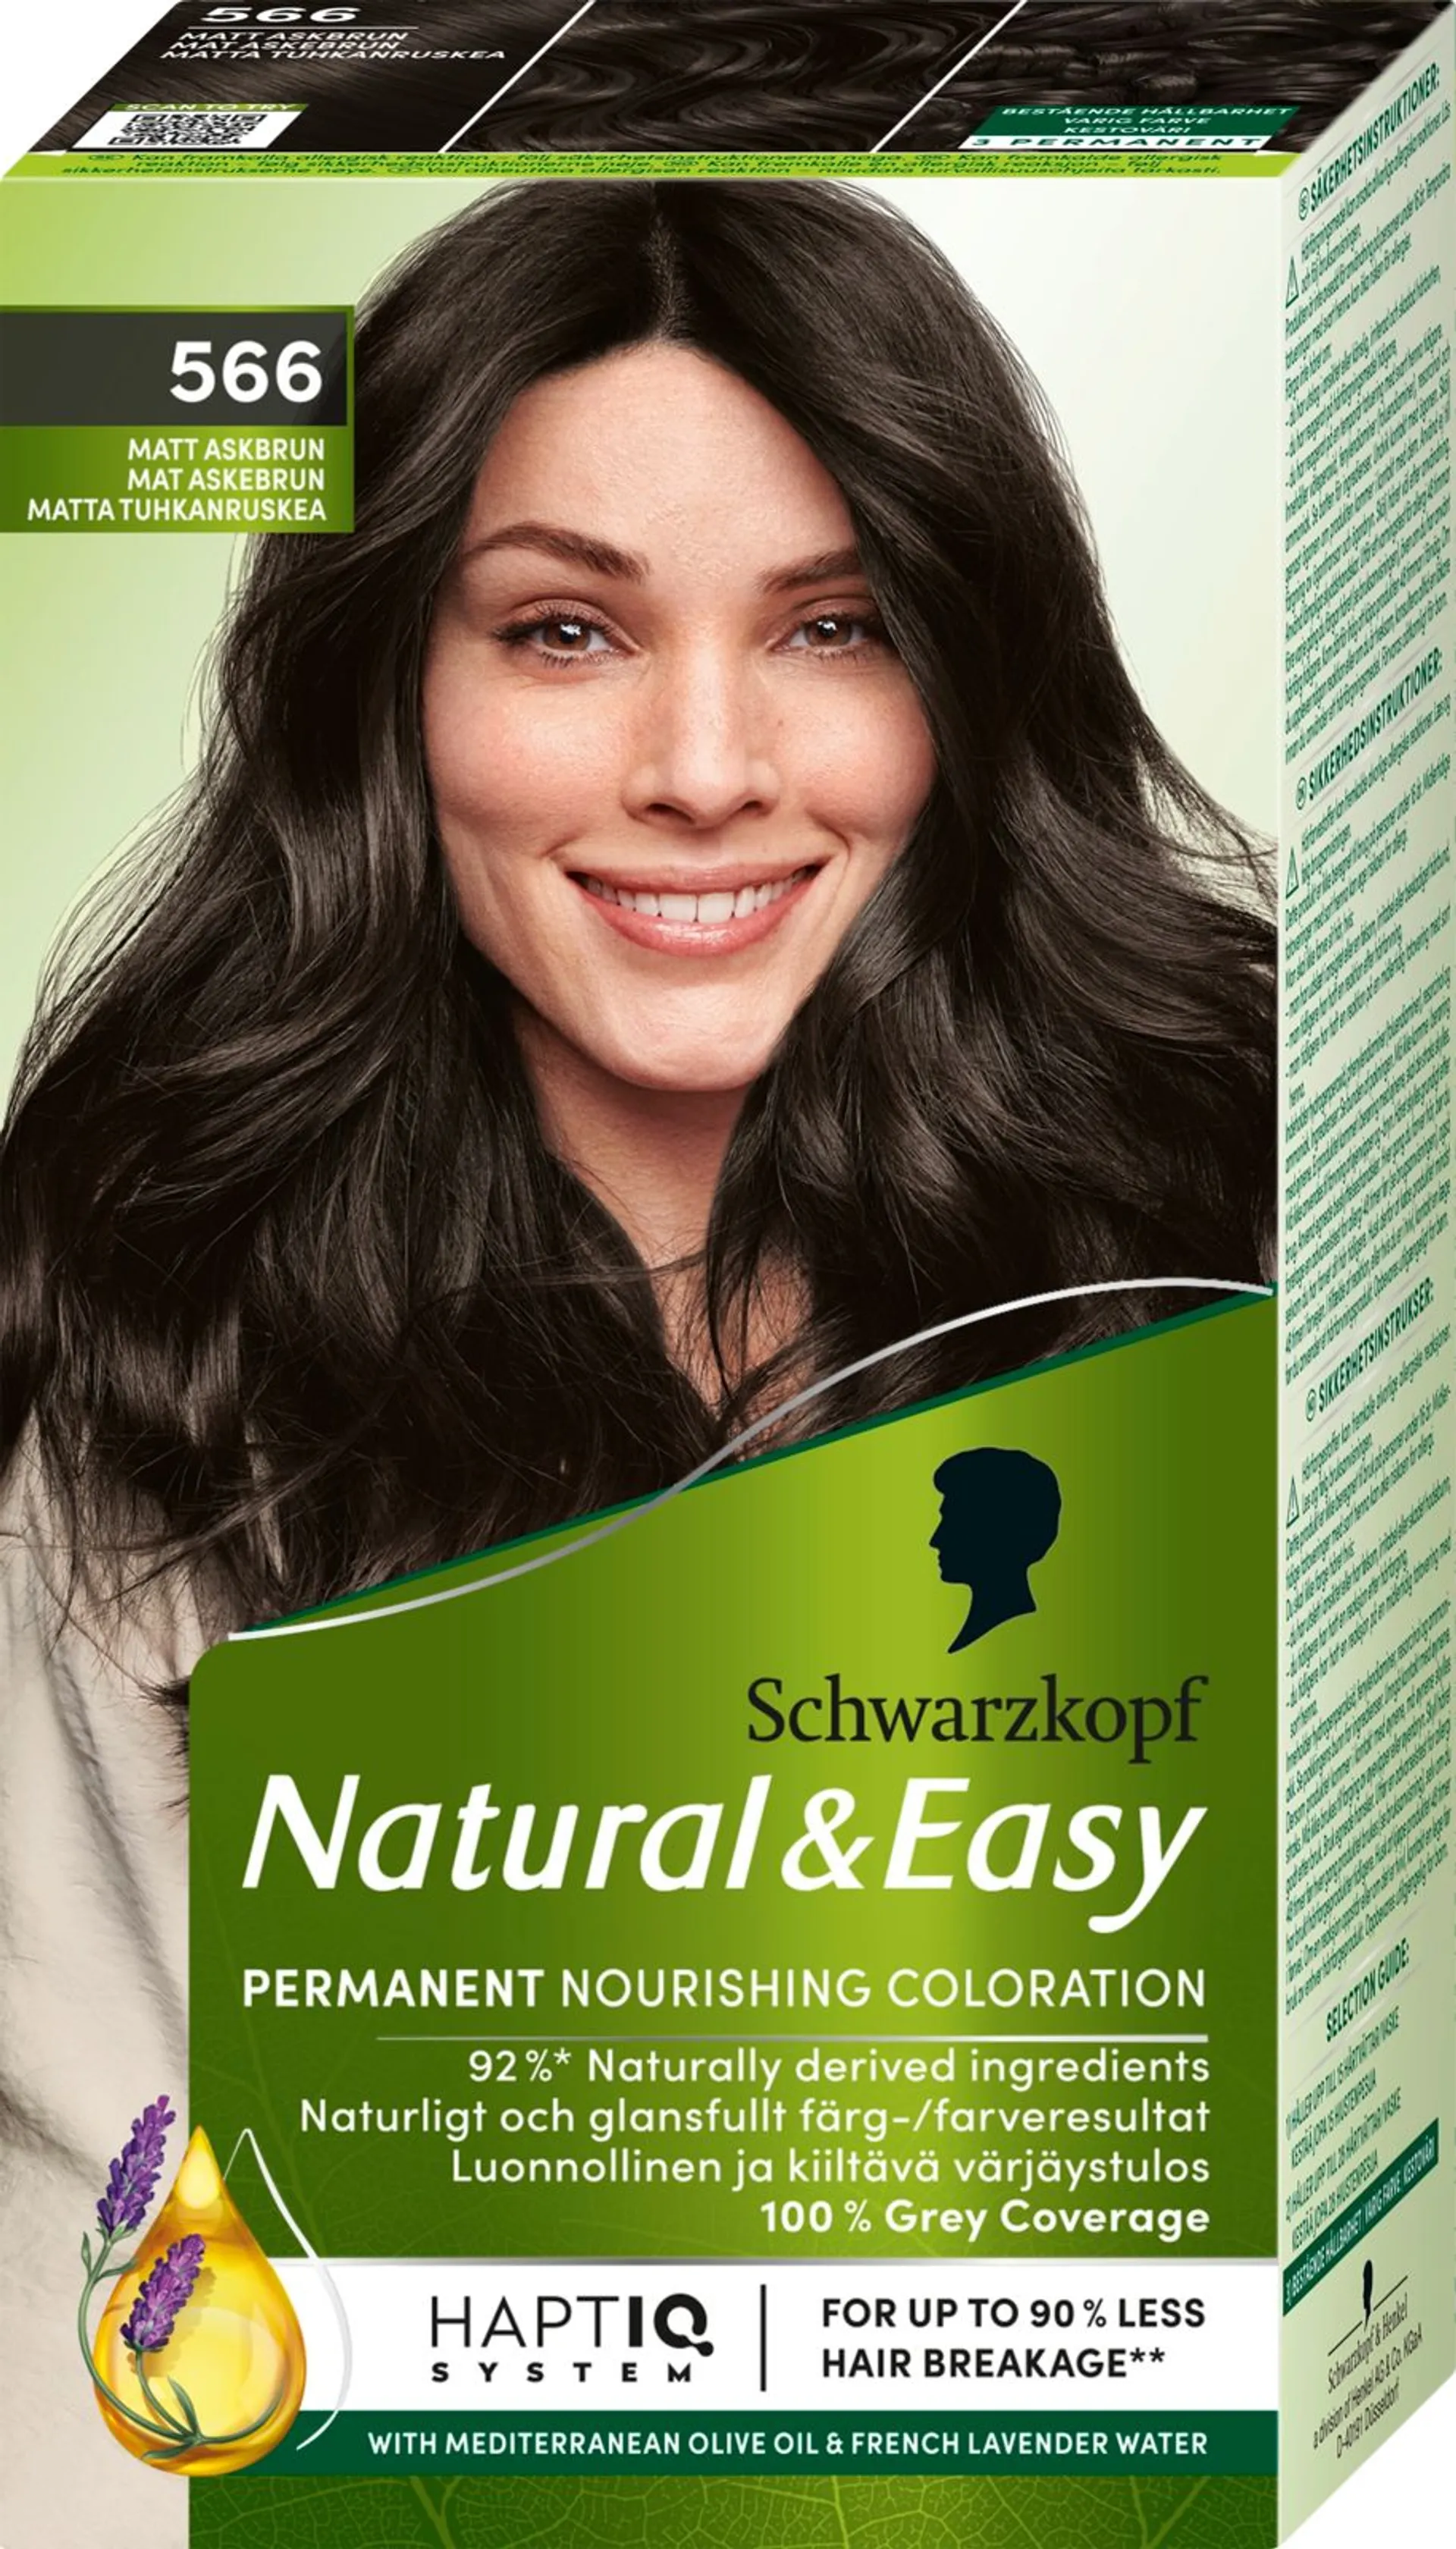 Schwarzkopf Natural & Easy 566 Matta Tuhkanruskea hiusväri - 1